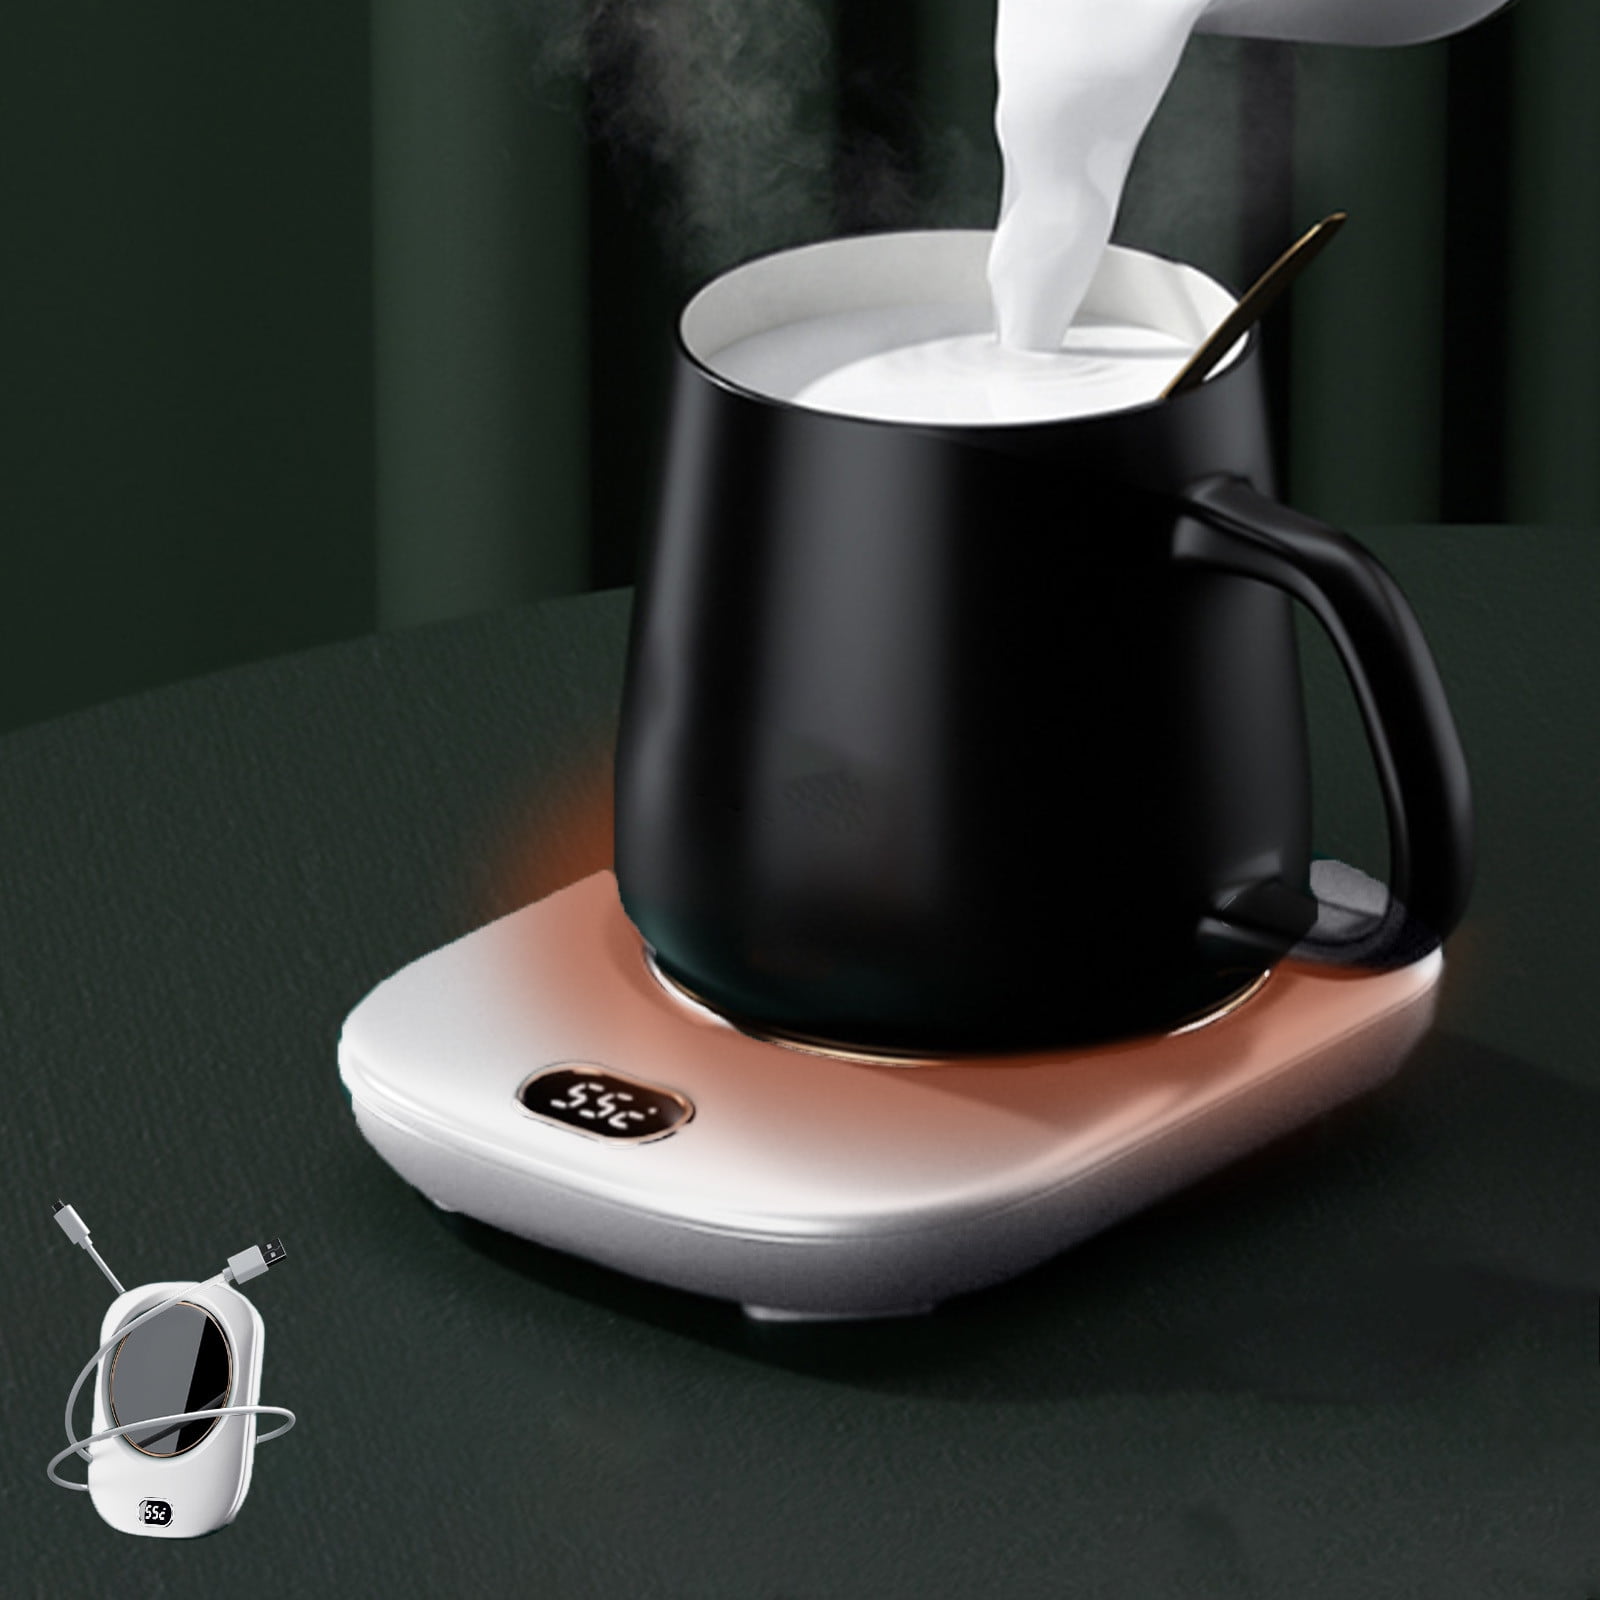 Mr. Coffee Tea Soup Hot Beverages MWBLK Mug Warmer for Office Home